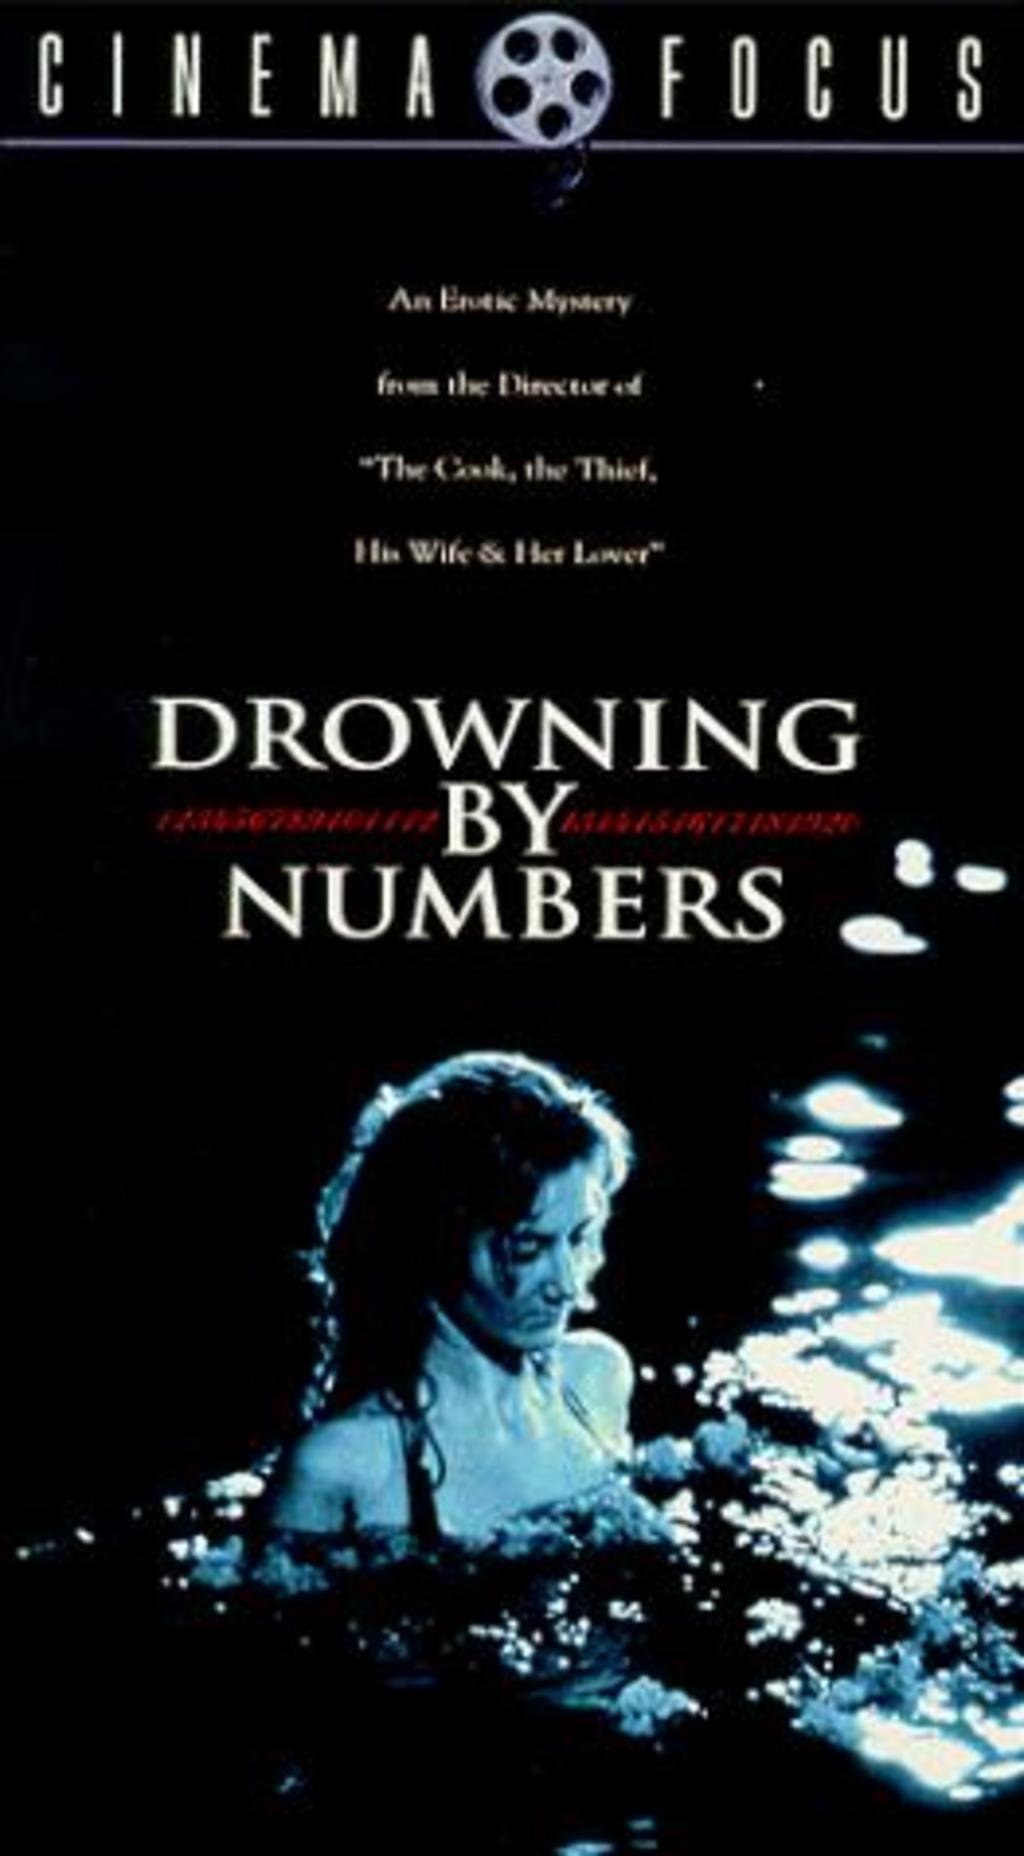 Отсчет утопленников. Drowning by numbers 1988. Джоэли Ричардсон отсчет утопленников. Drowning by numbers (1988) poster.